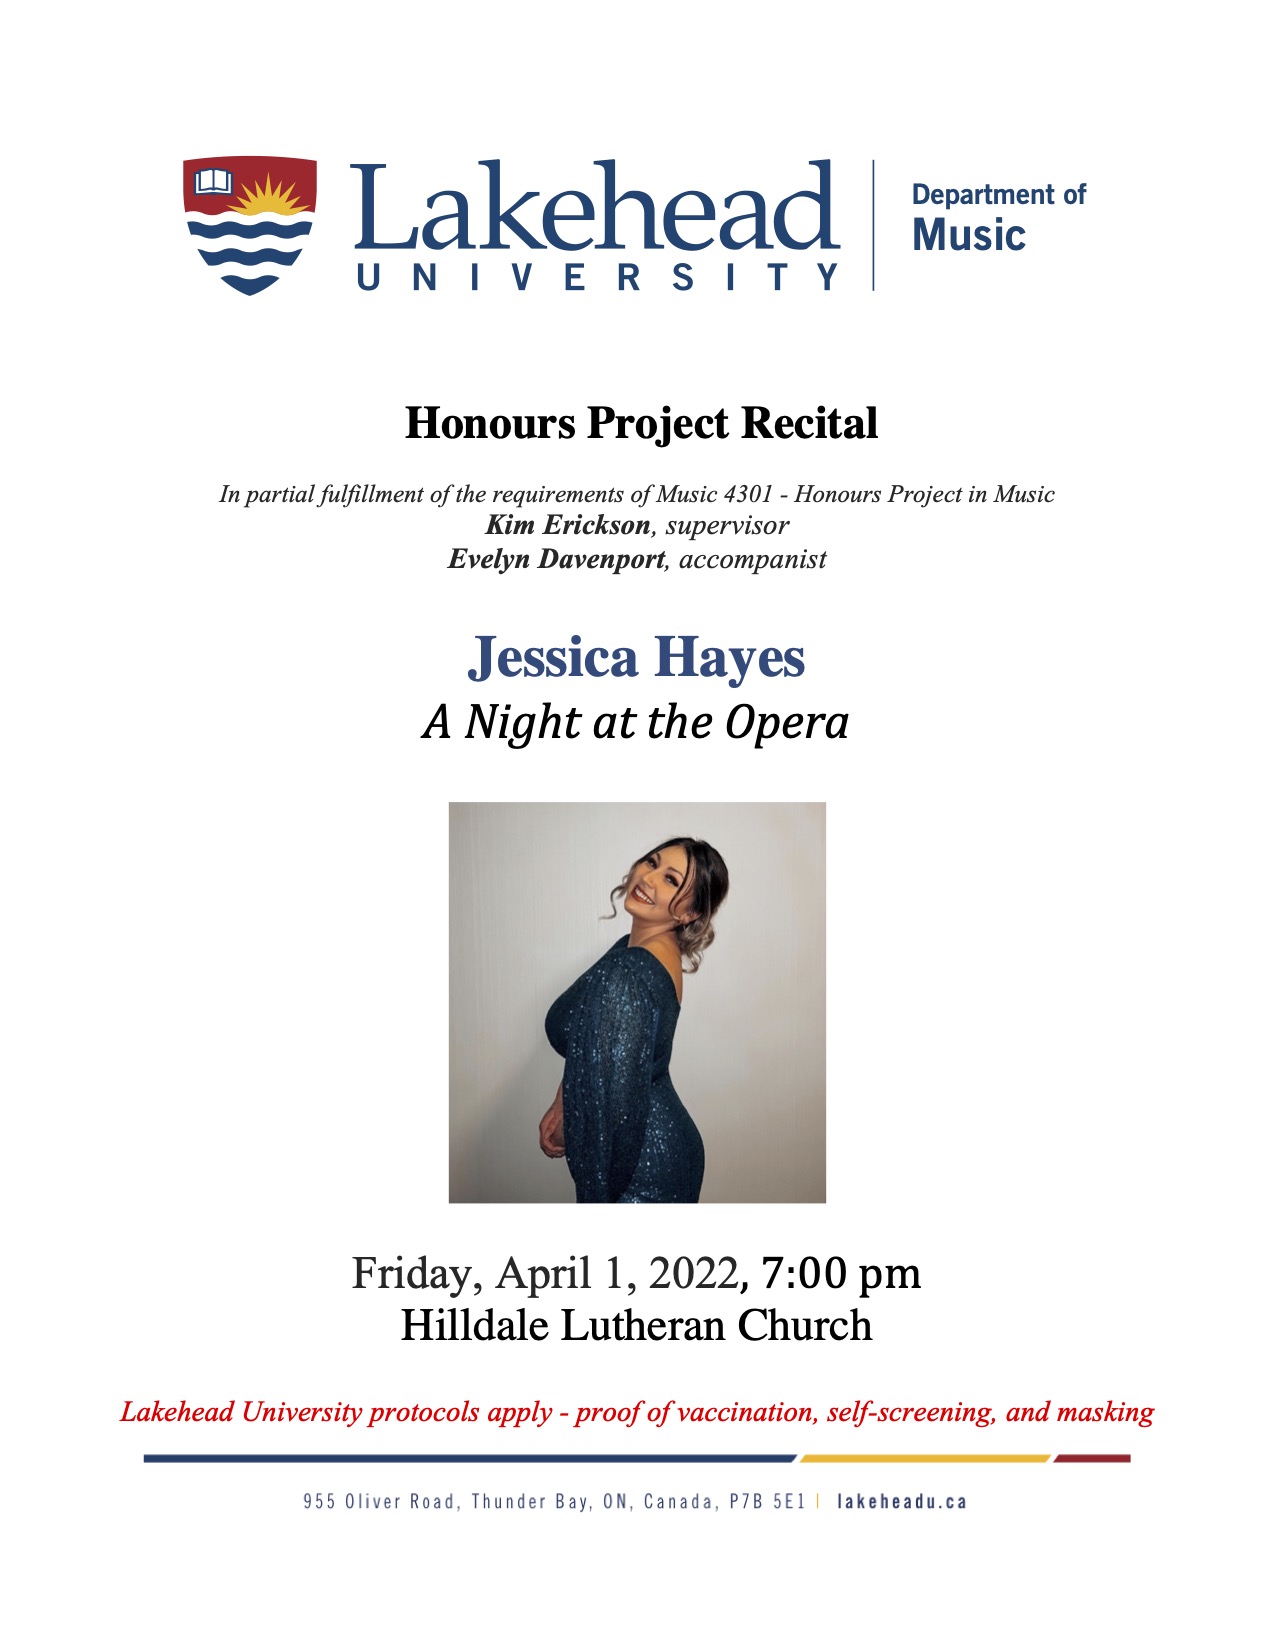 Jessica Hayes Recital